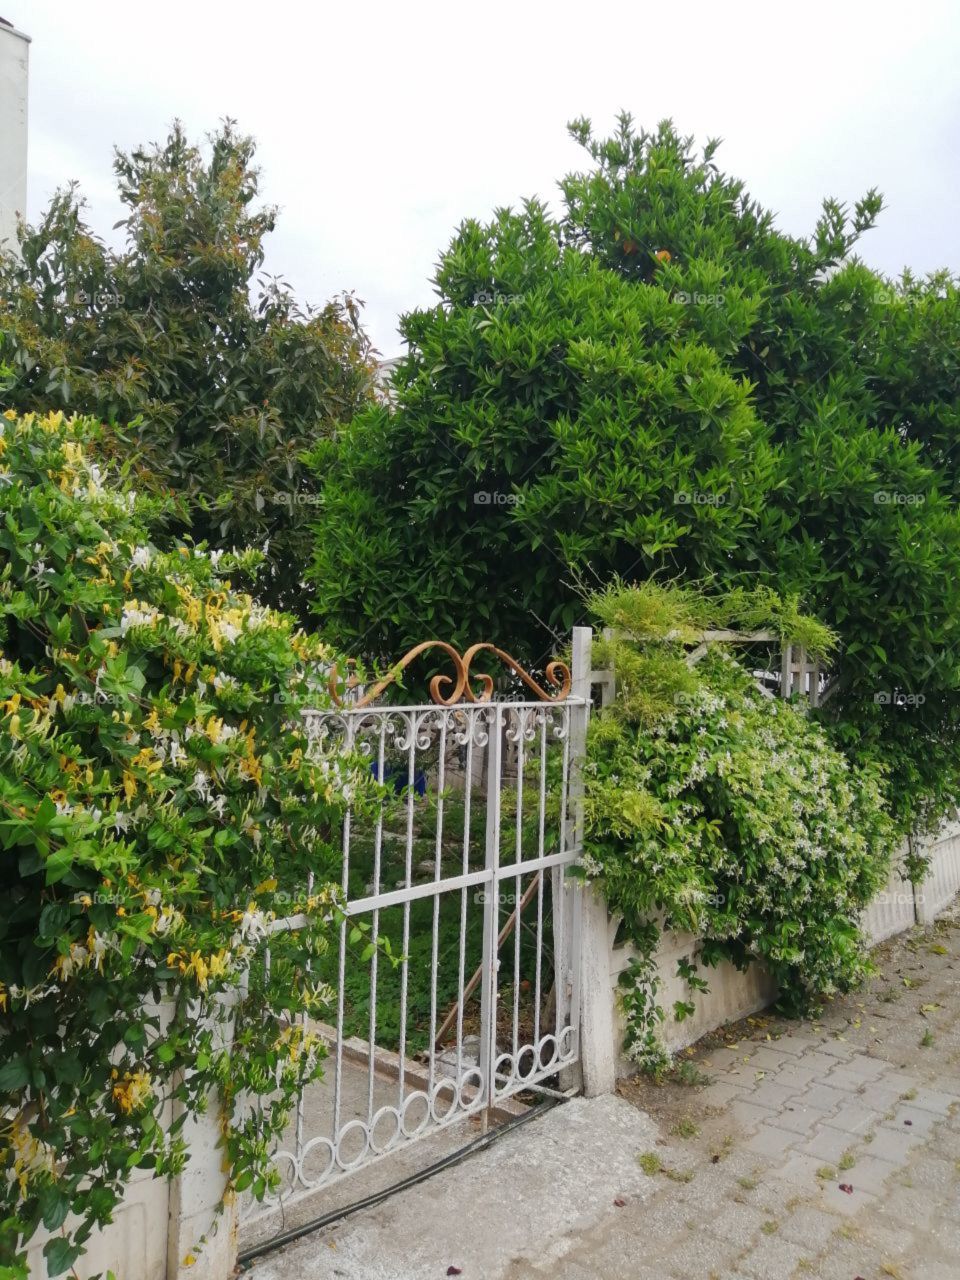 metal gate in the garden